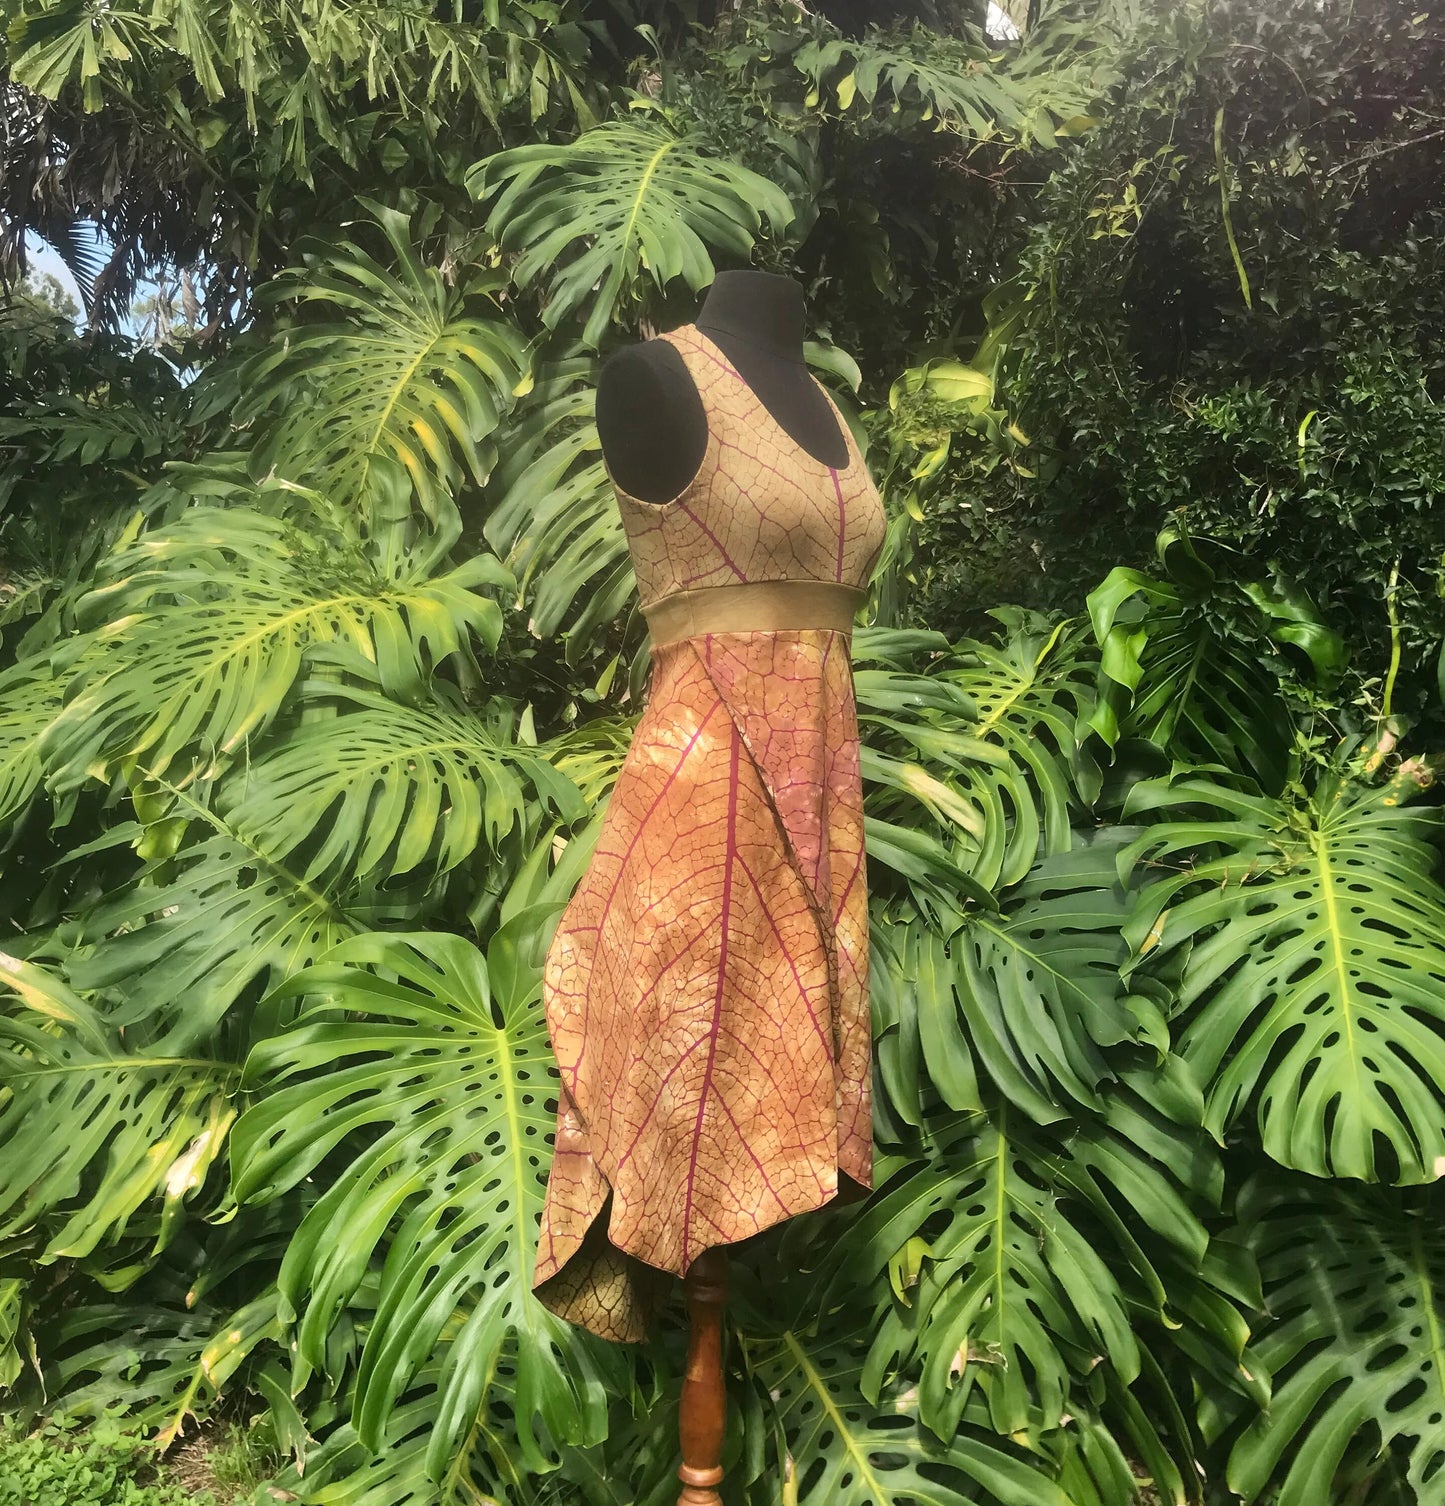 Leafy Creations Dress